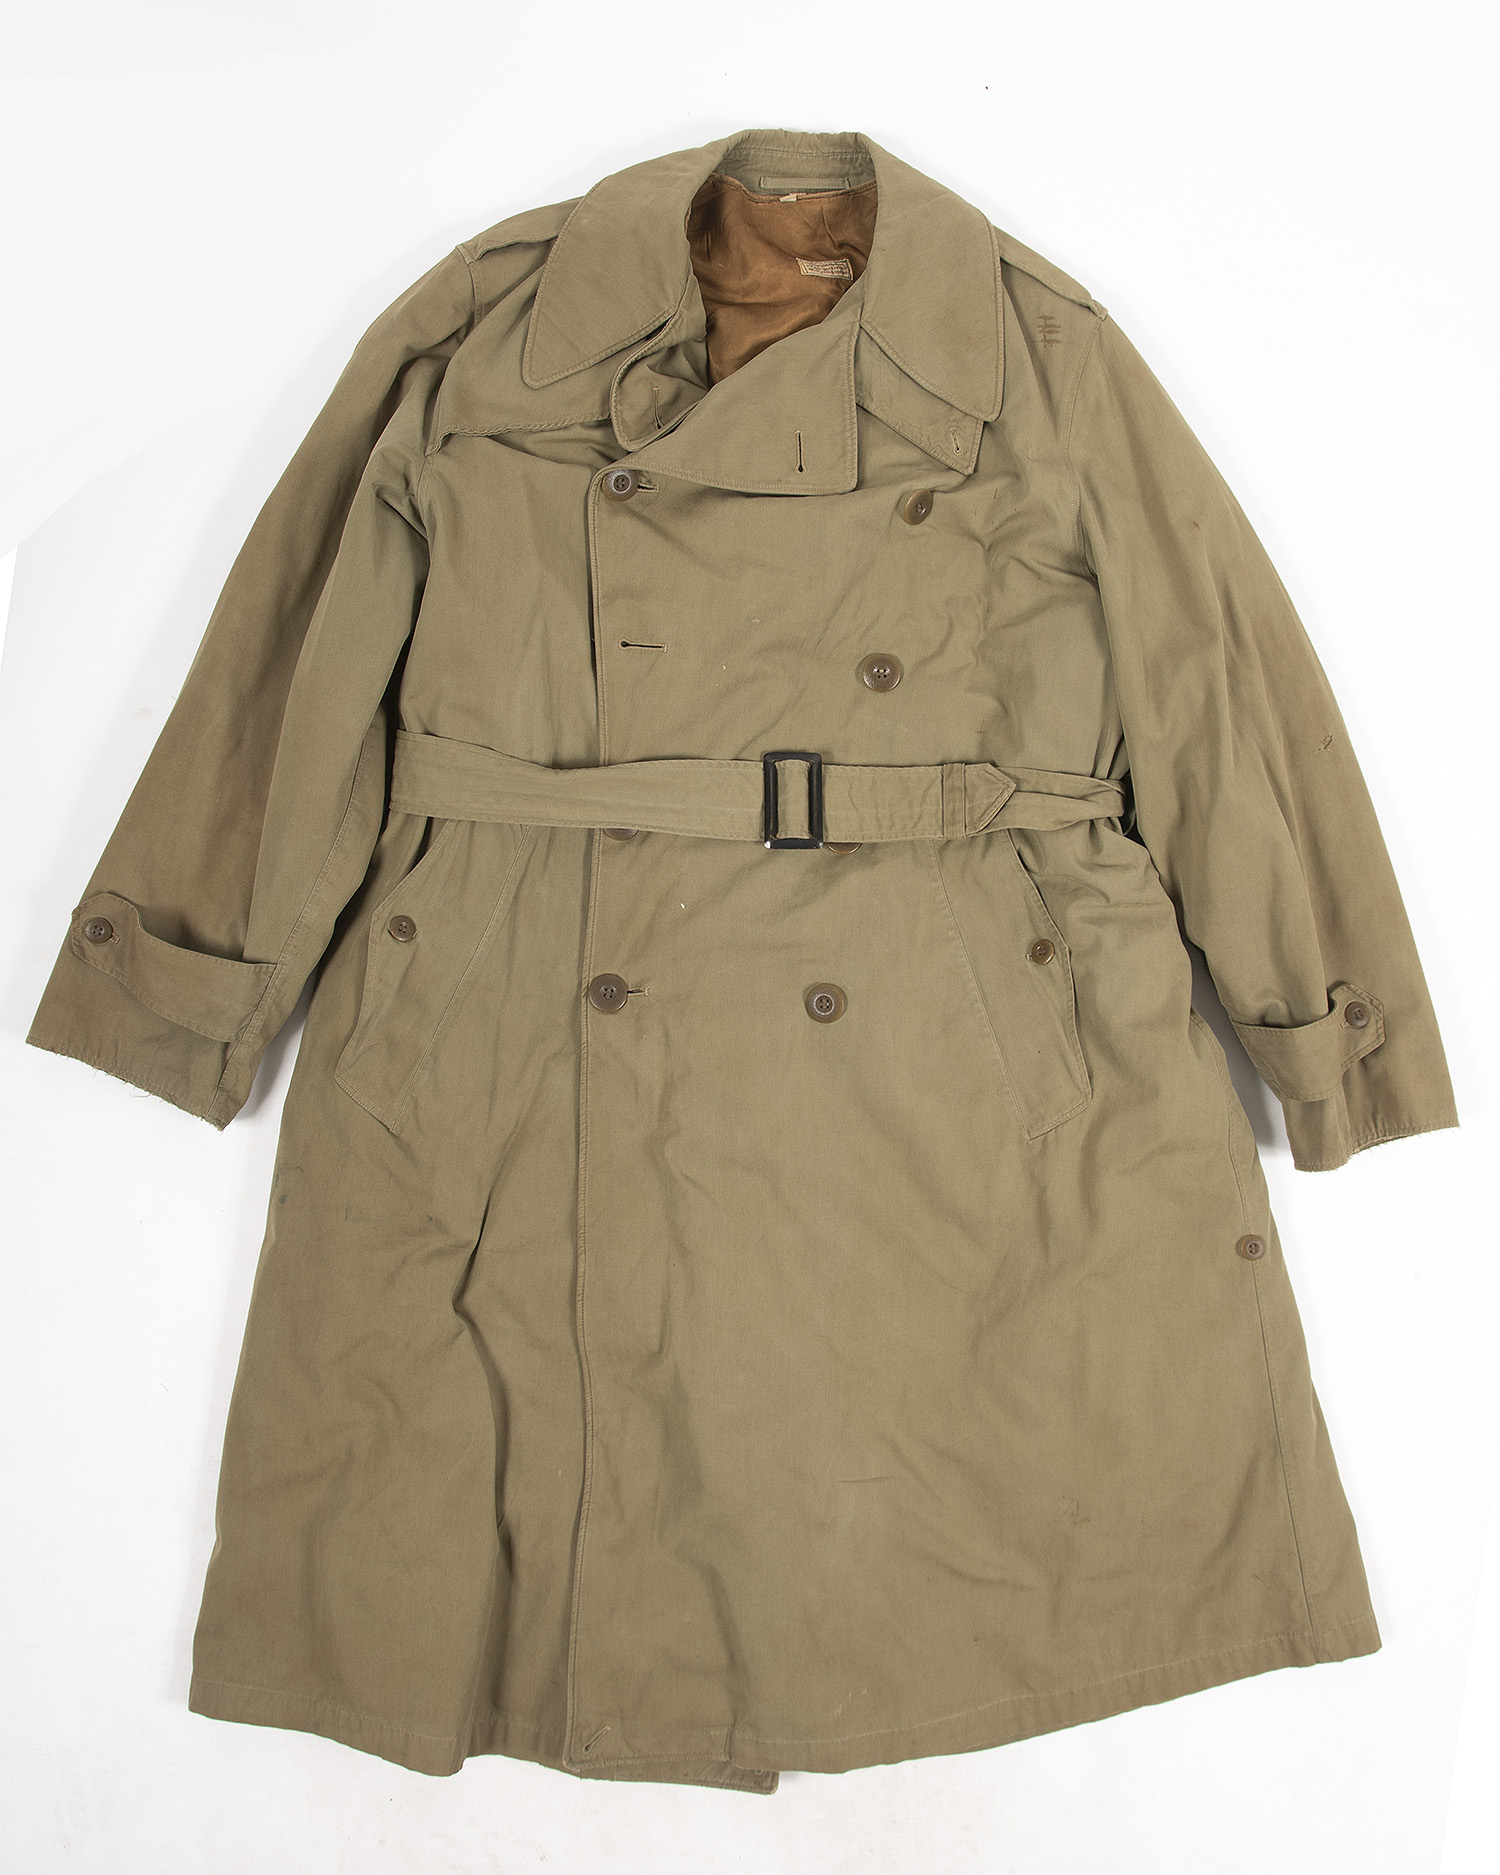 Original Officer's Field Overcoat w/ Liner size 40L